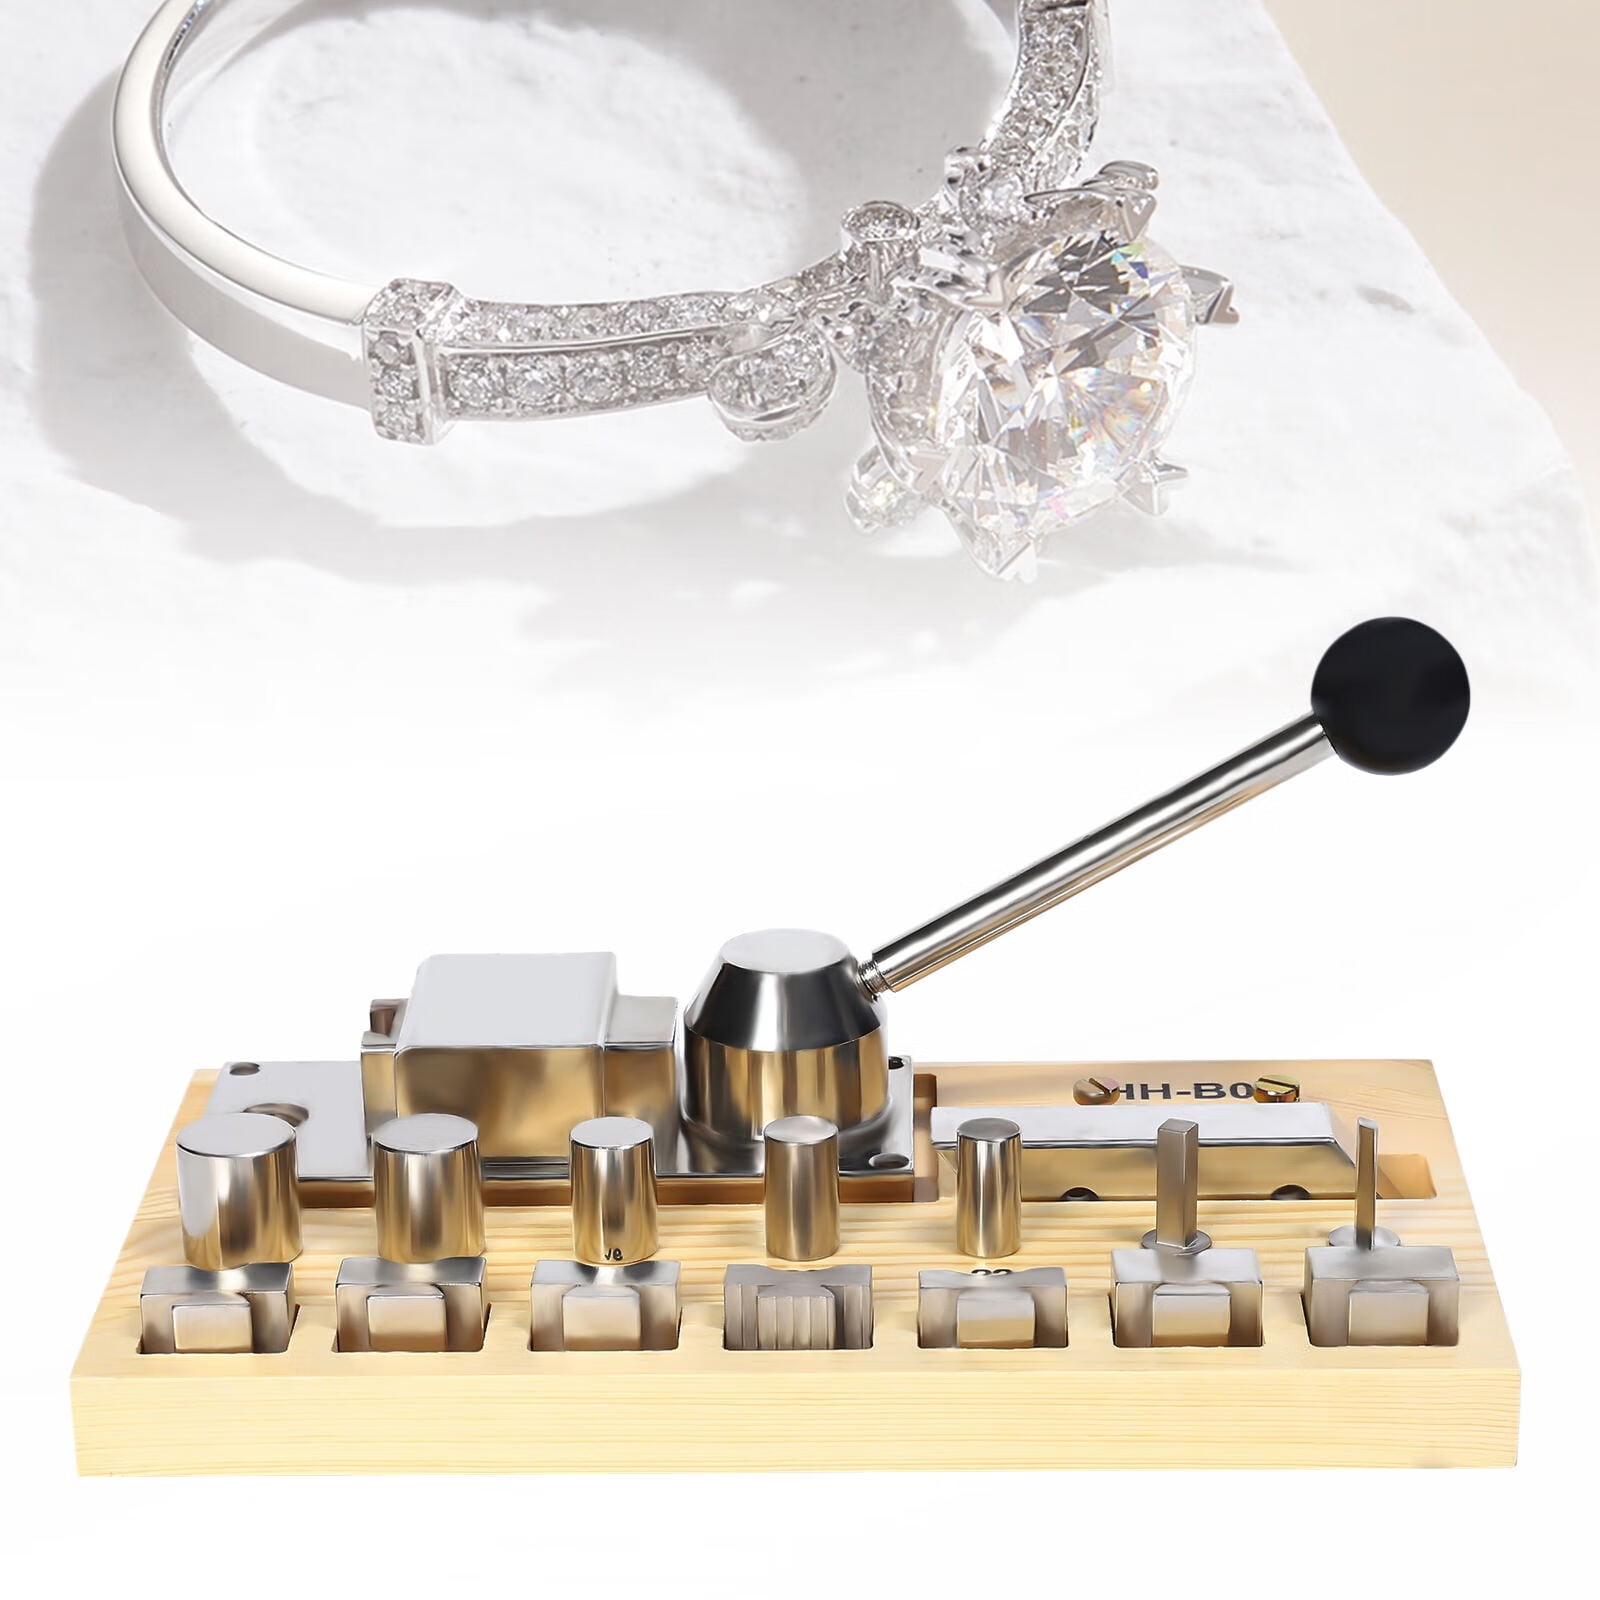 NG NOPTEG ring earring bending tool machine - ring bender jewelry making tool  rings repair bracelets shaping kit